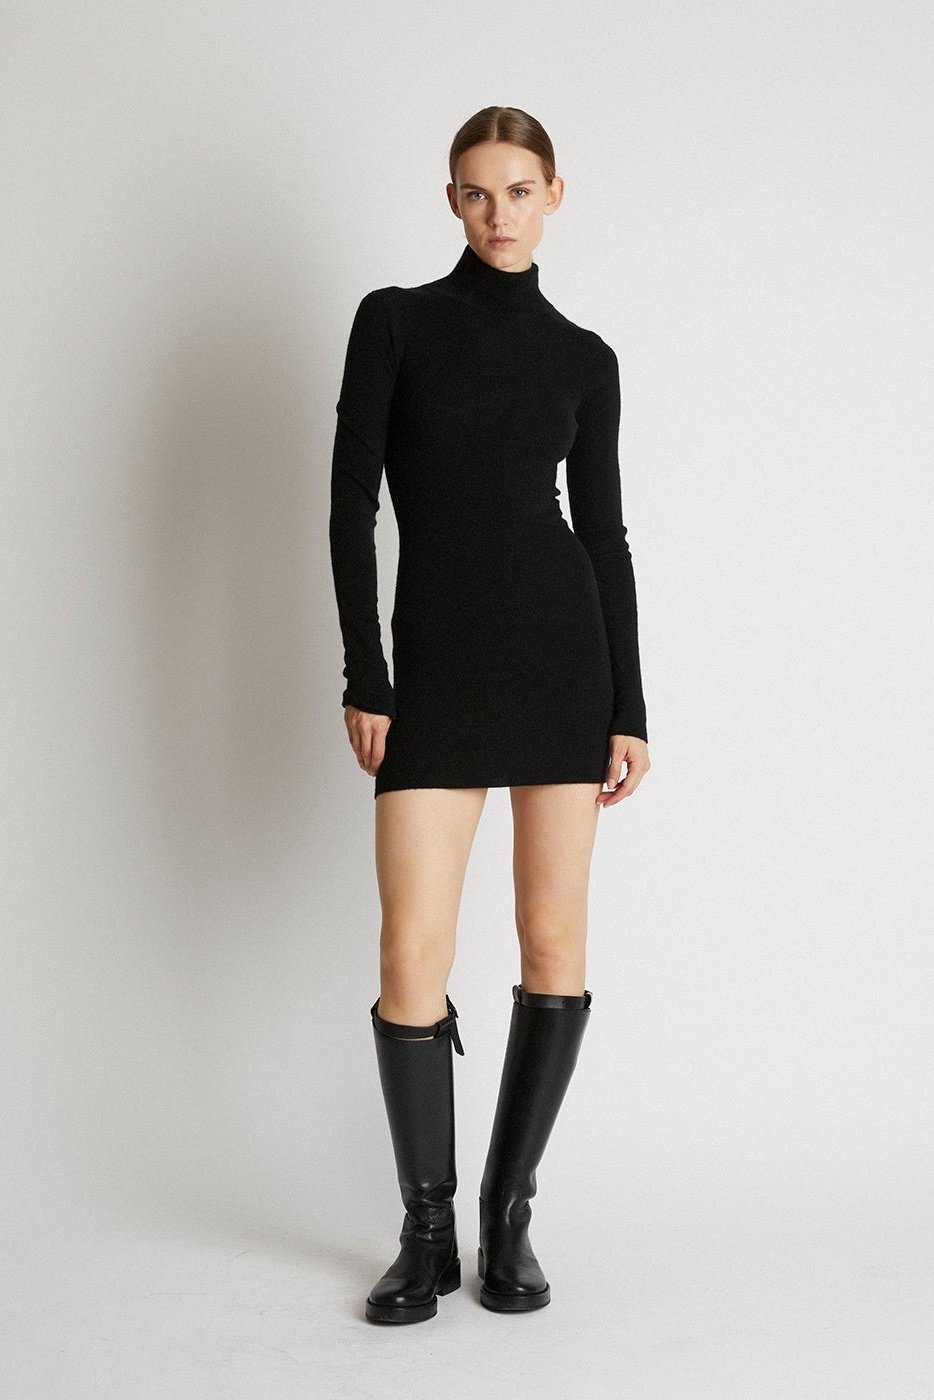 + Beryll Cashmere Turtleneck Dress | Black - +Beryll Cashmere Turtleneck Dress | Black - +Beryll Worn By Good People